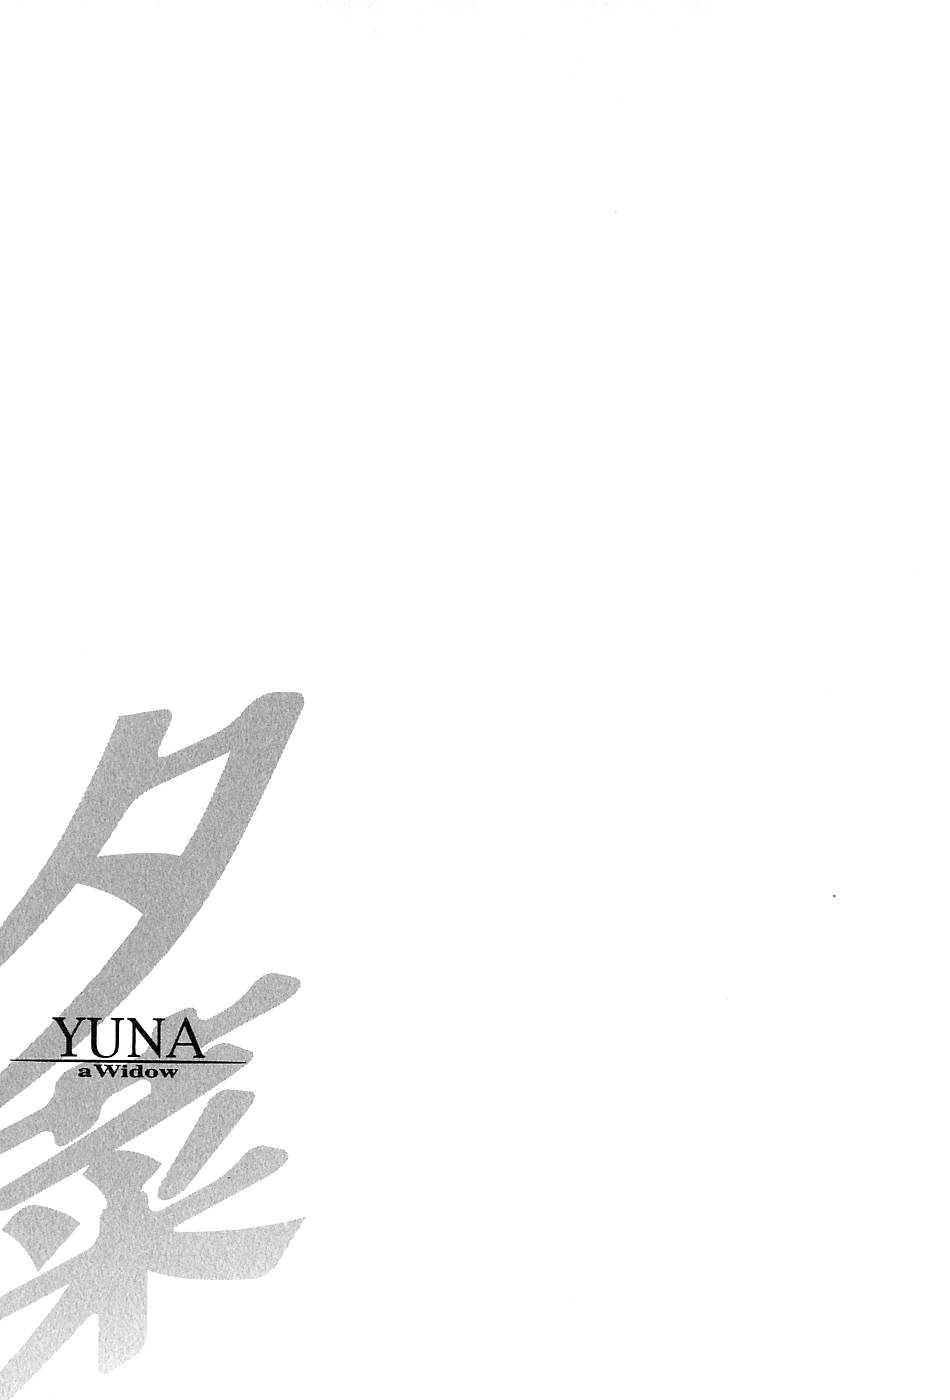 [Kitazato Nawoki] Yuna a Widow Vol.3 [Chinese] [北里ナヲキ] 夕菜 第三章 性愛の果て [自由騎士團 第002號]